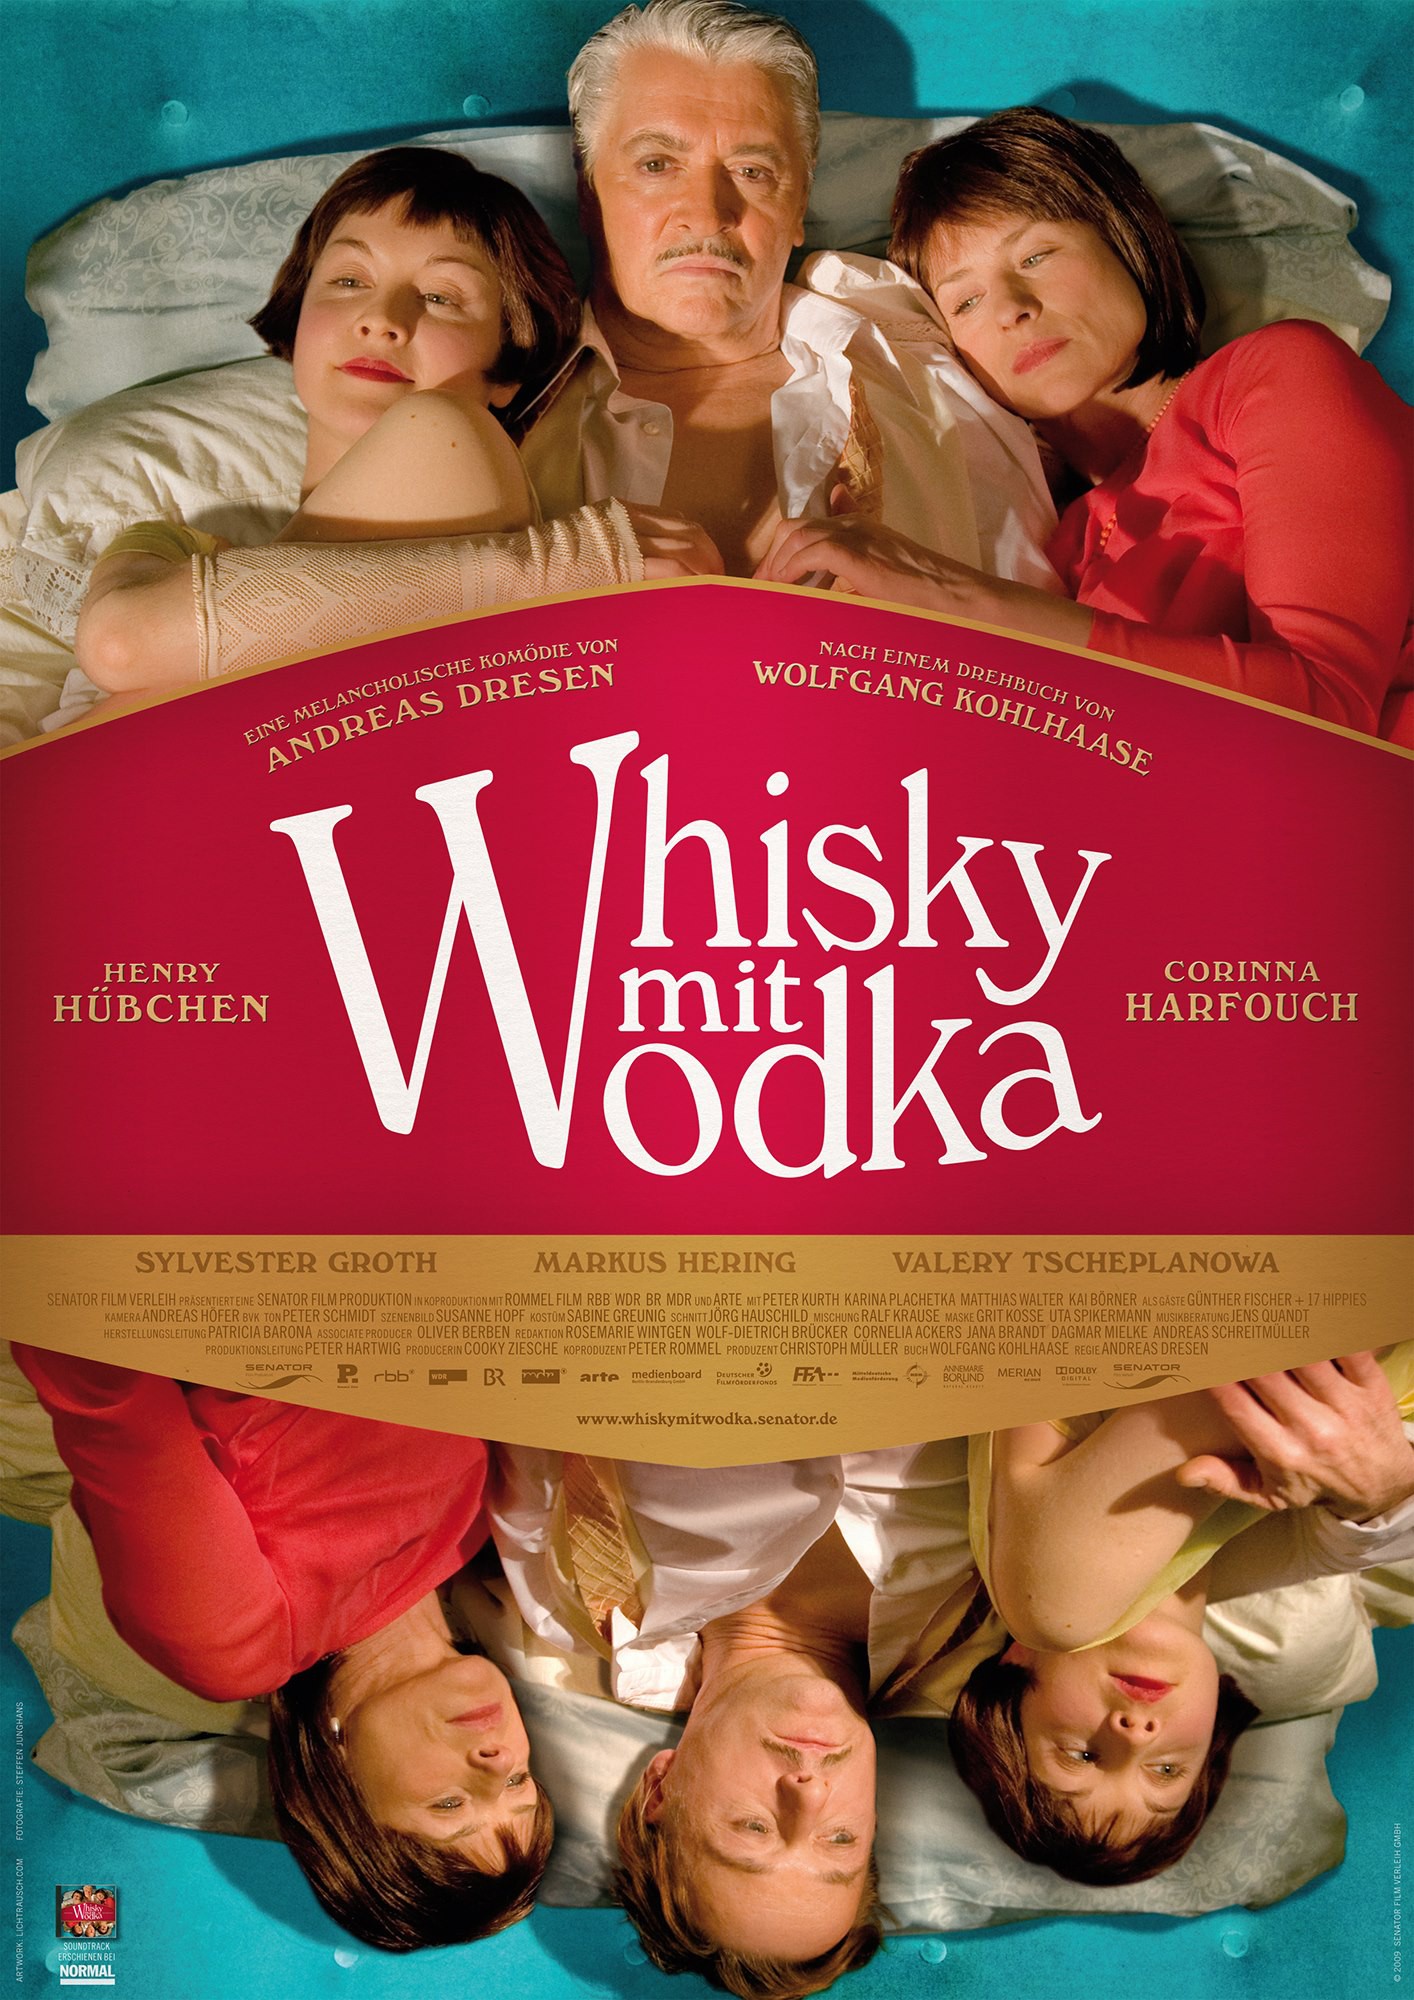 Mega Sized Movie Poster Image for Whisky mit Wodka 